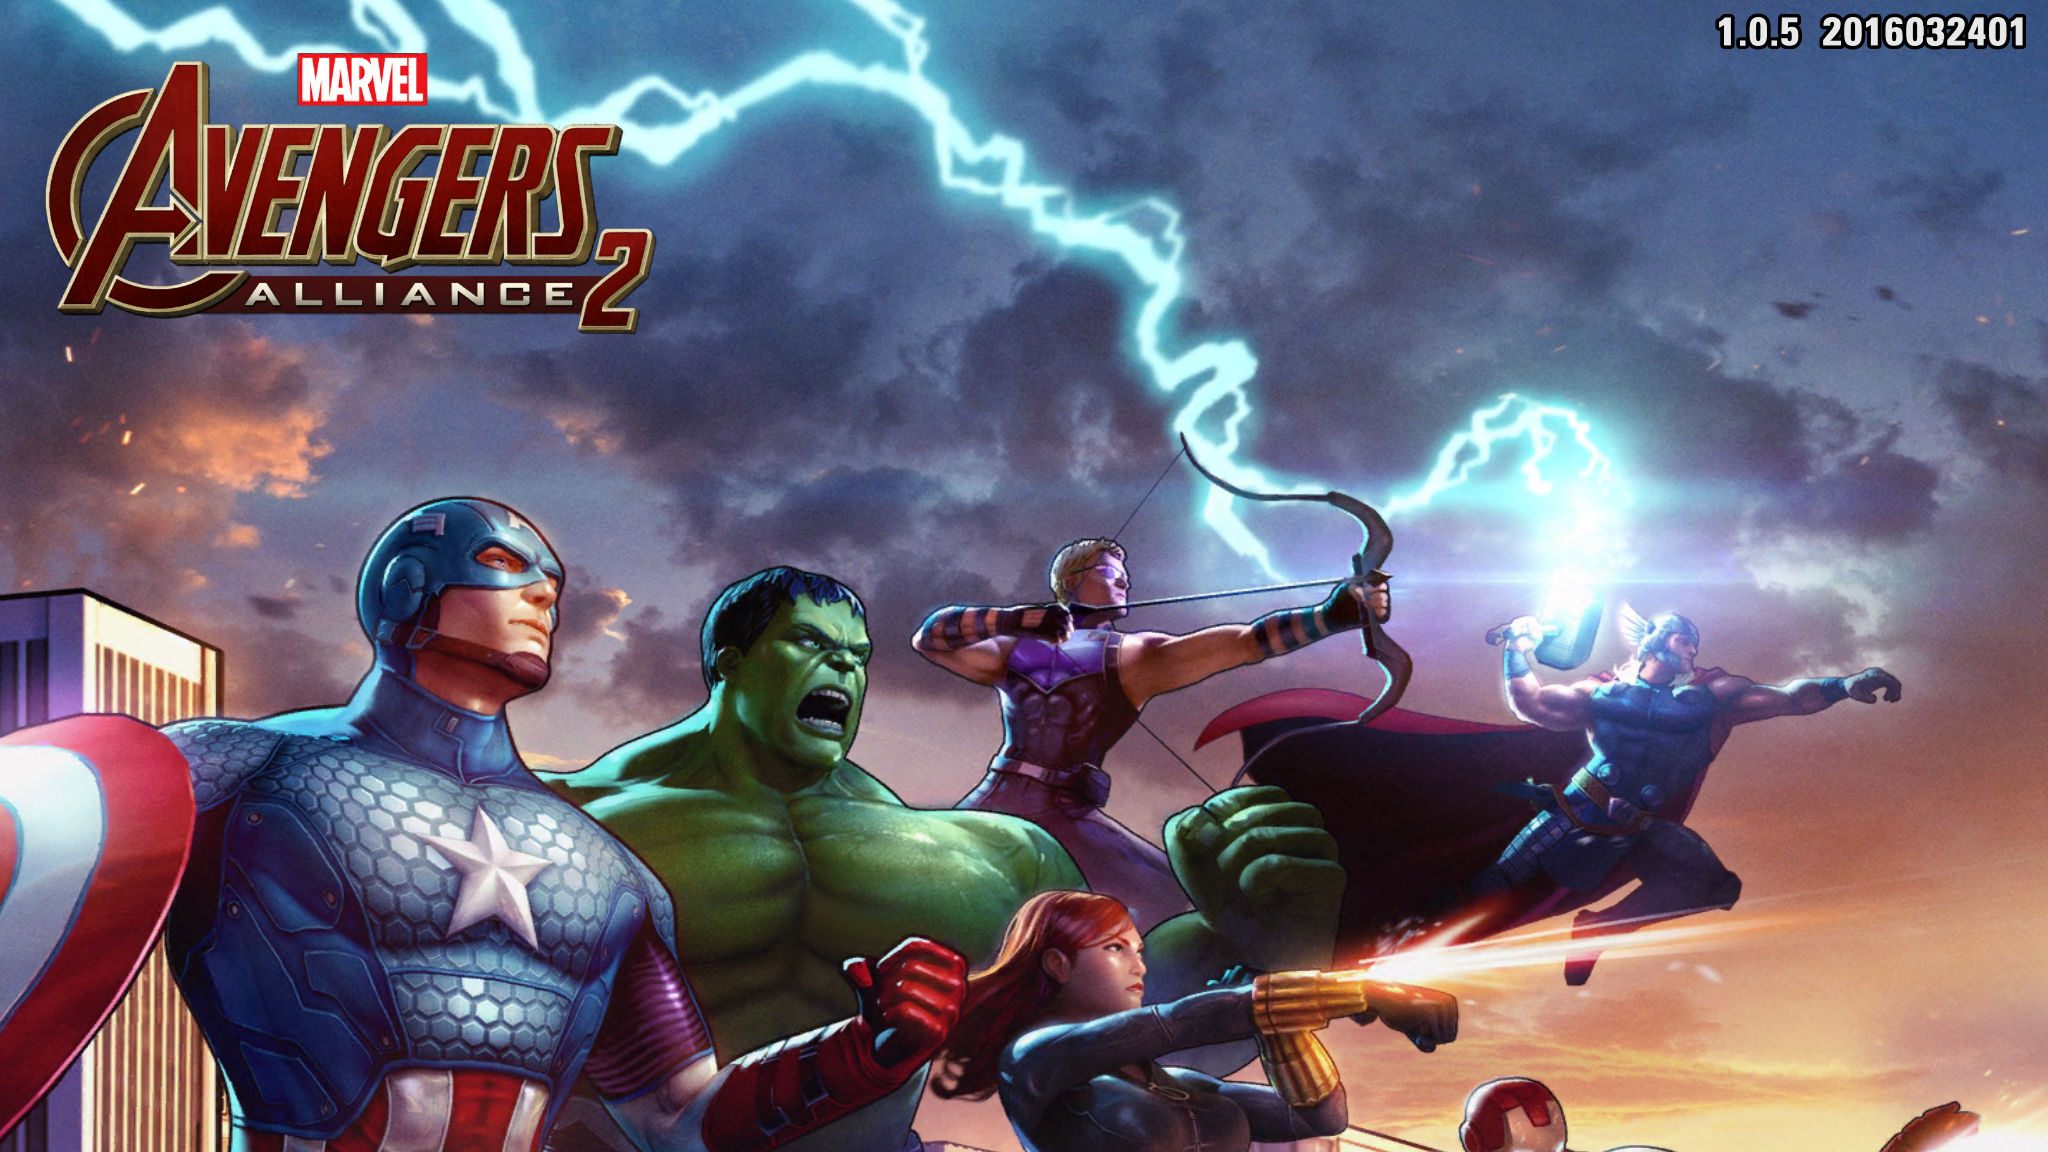 Marvel: Avengers Alliance 2 Tips, Cheats and Strategies